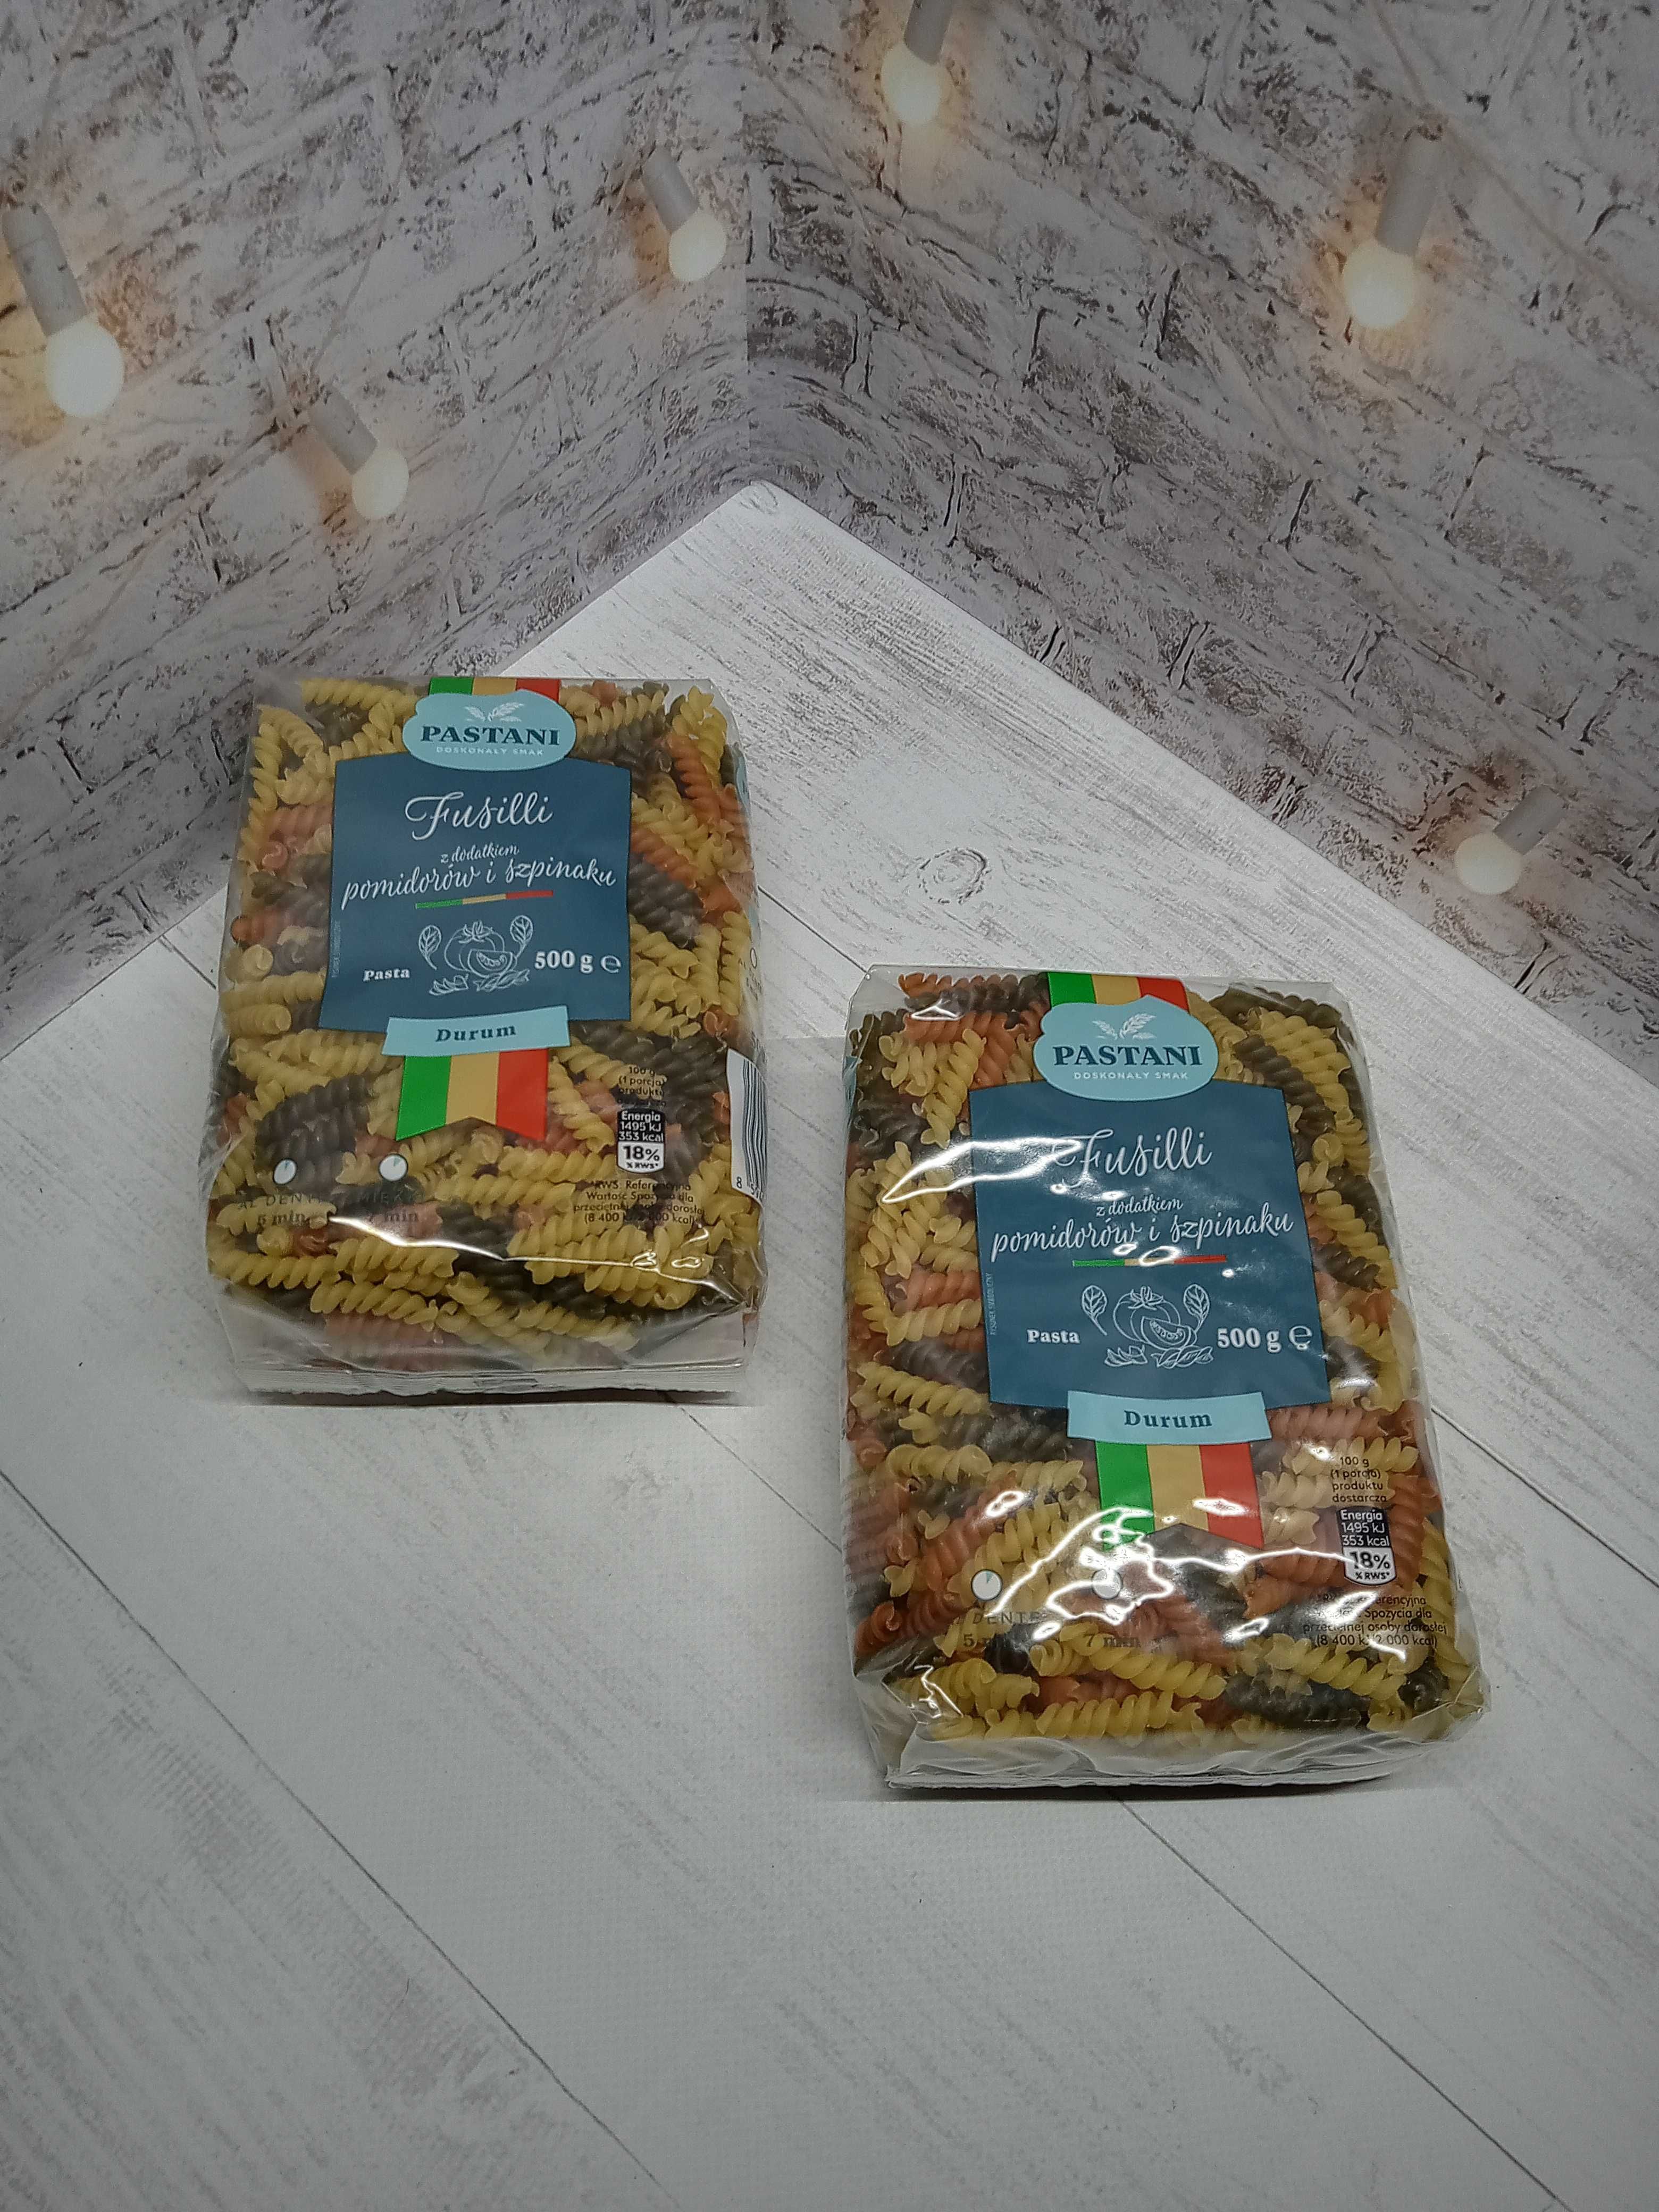 Кольорові макарони Pastani Reggia Italiamo; Лазань